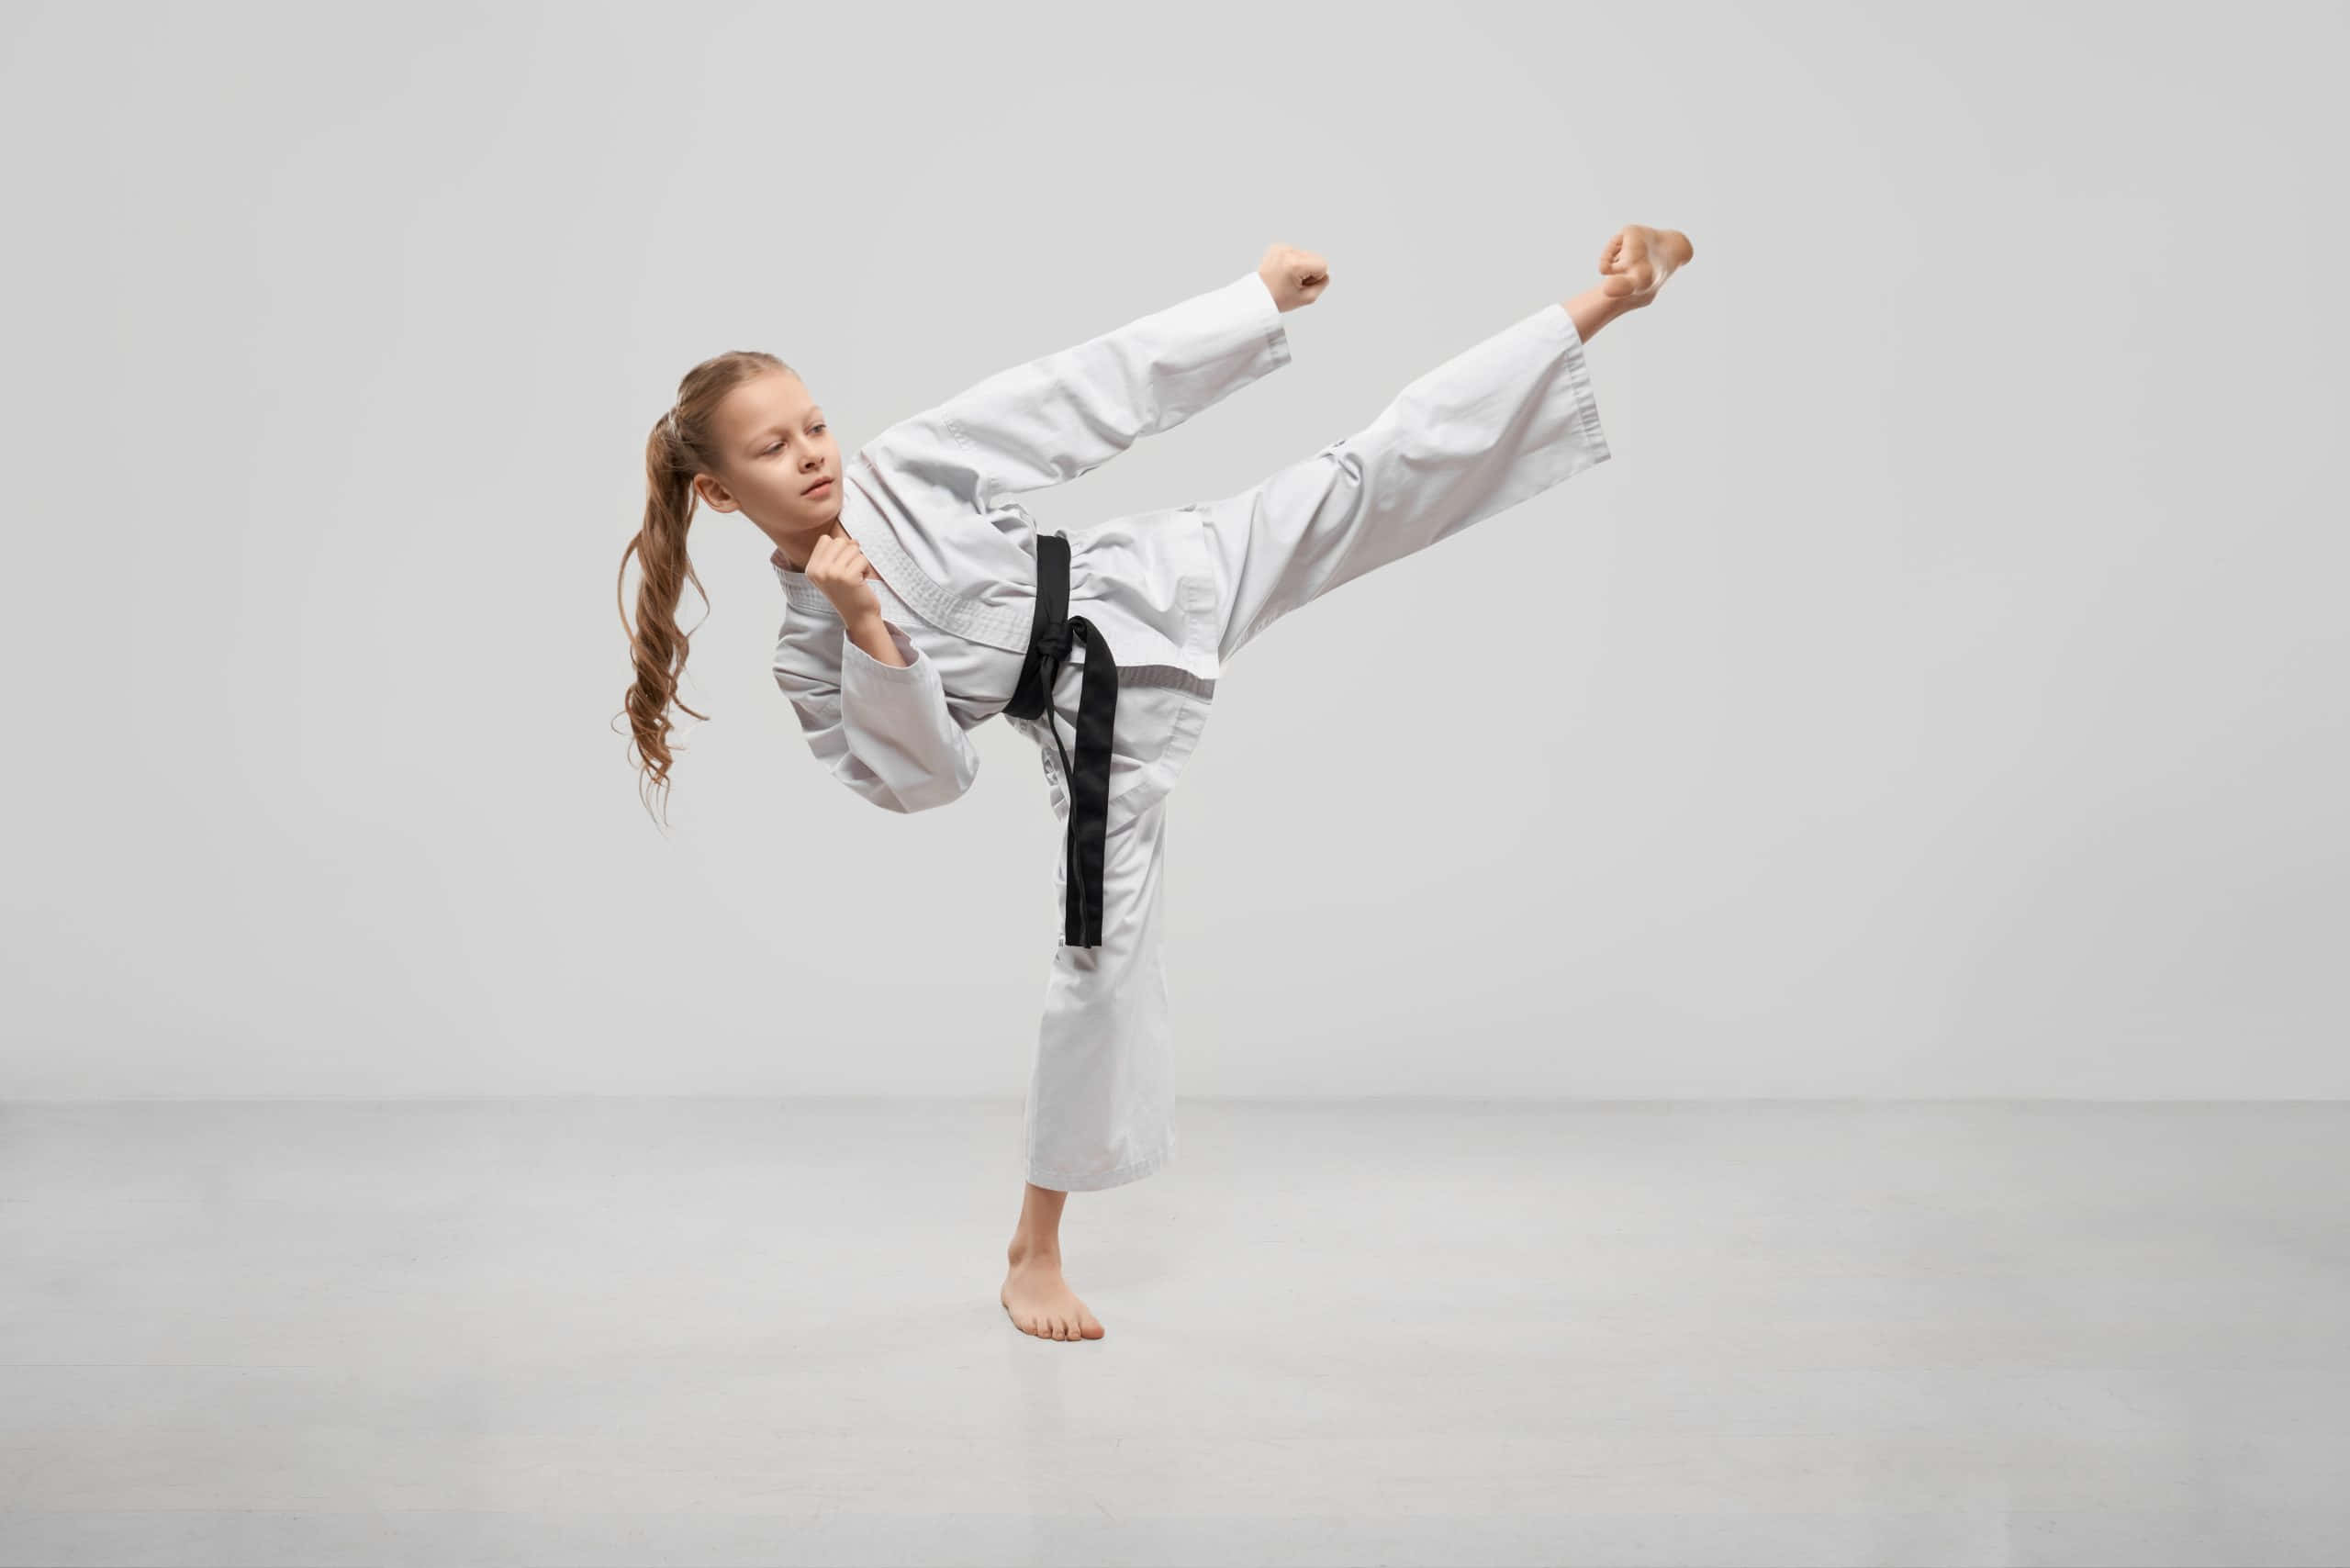 Karatebilder